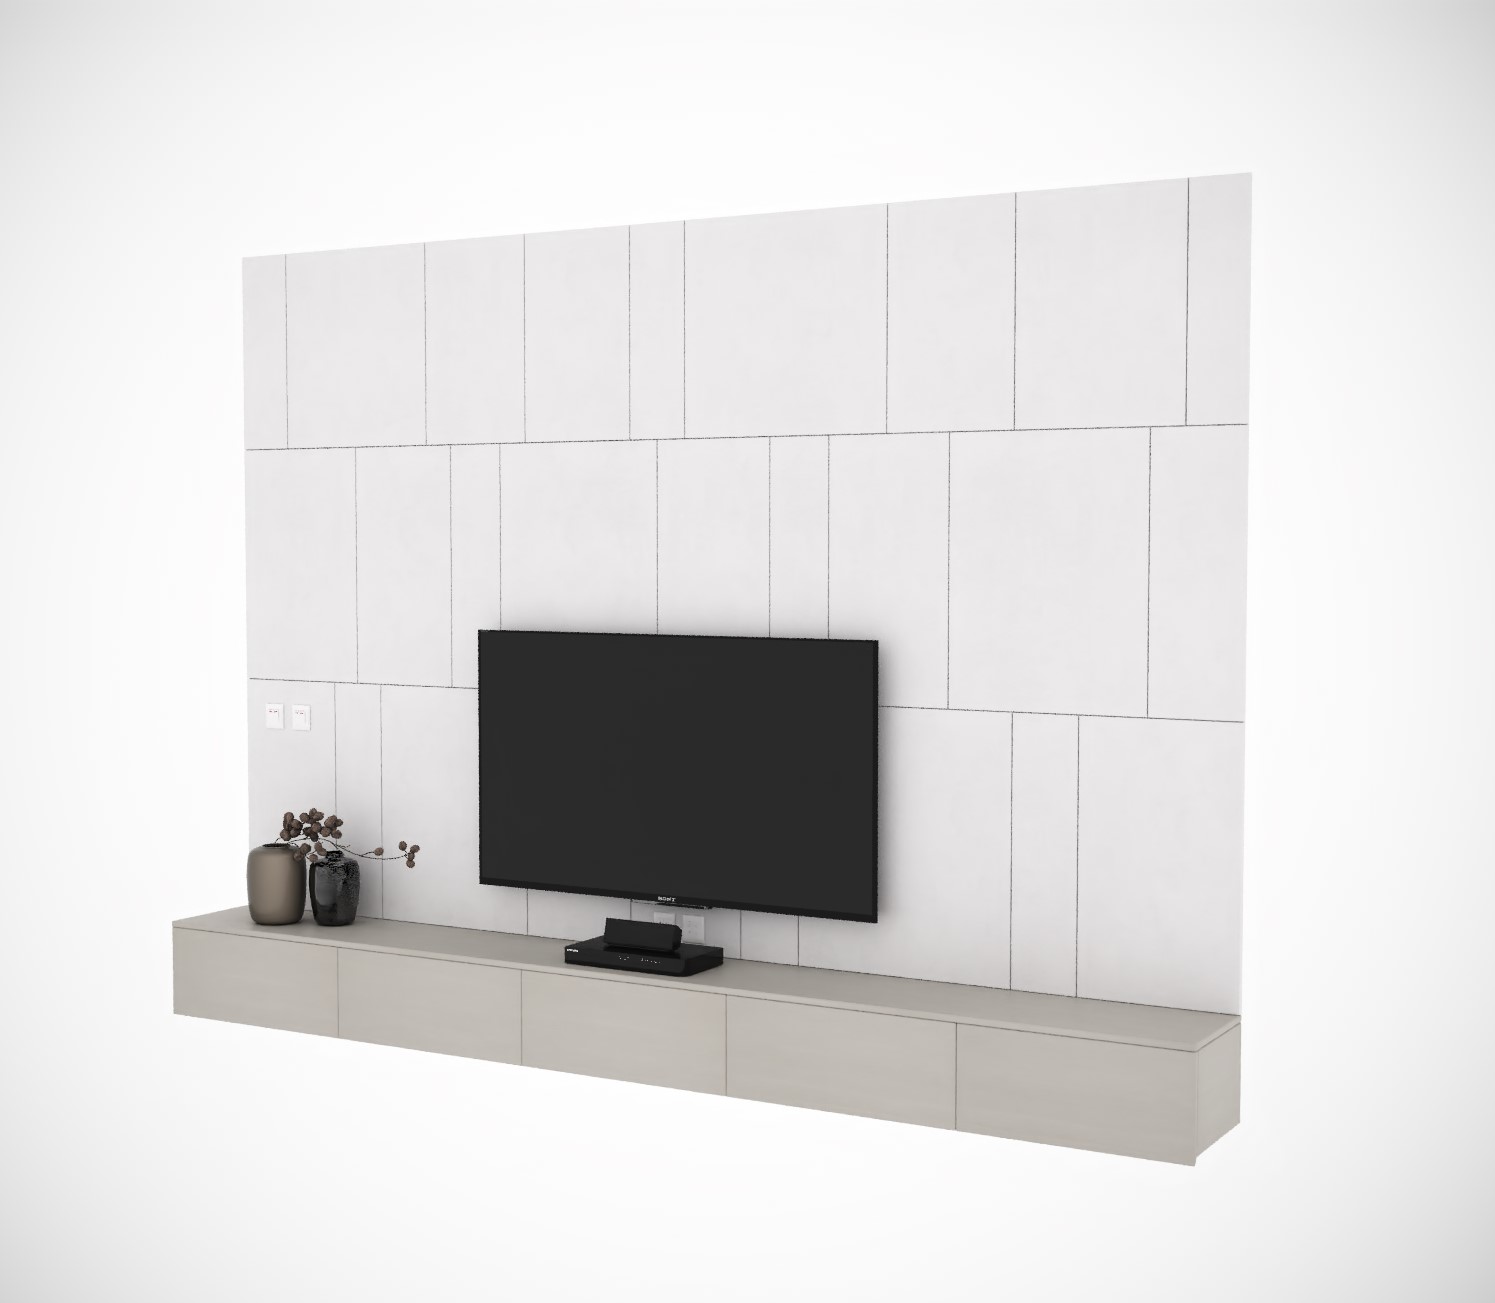 10413. Download Free Wall TV Model By Vu Long